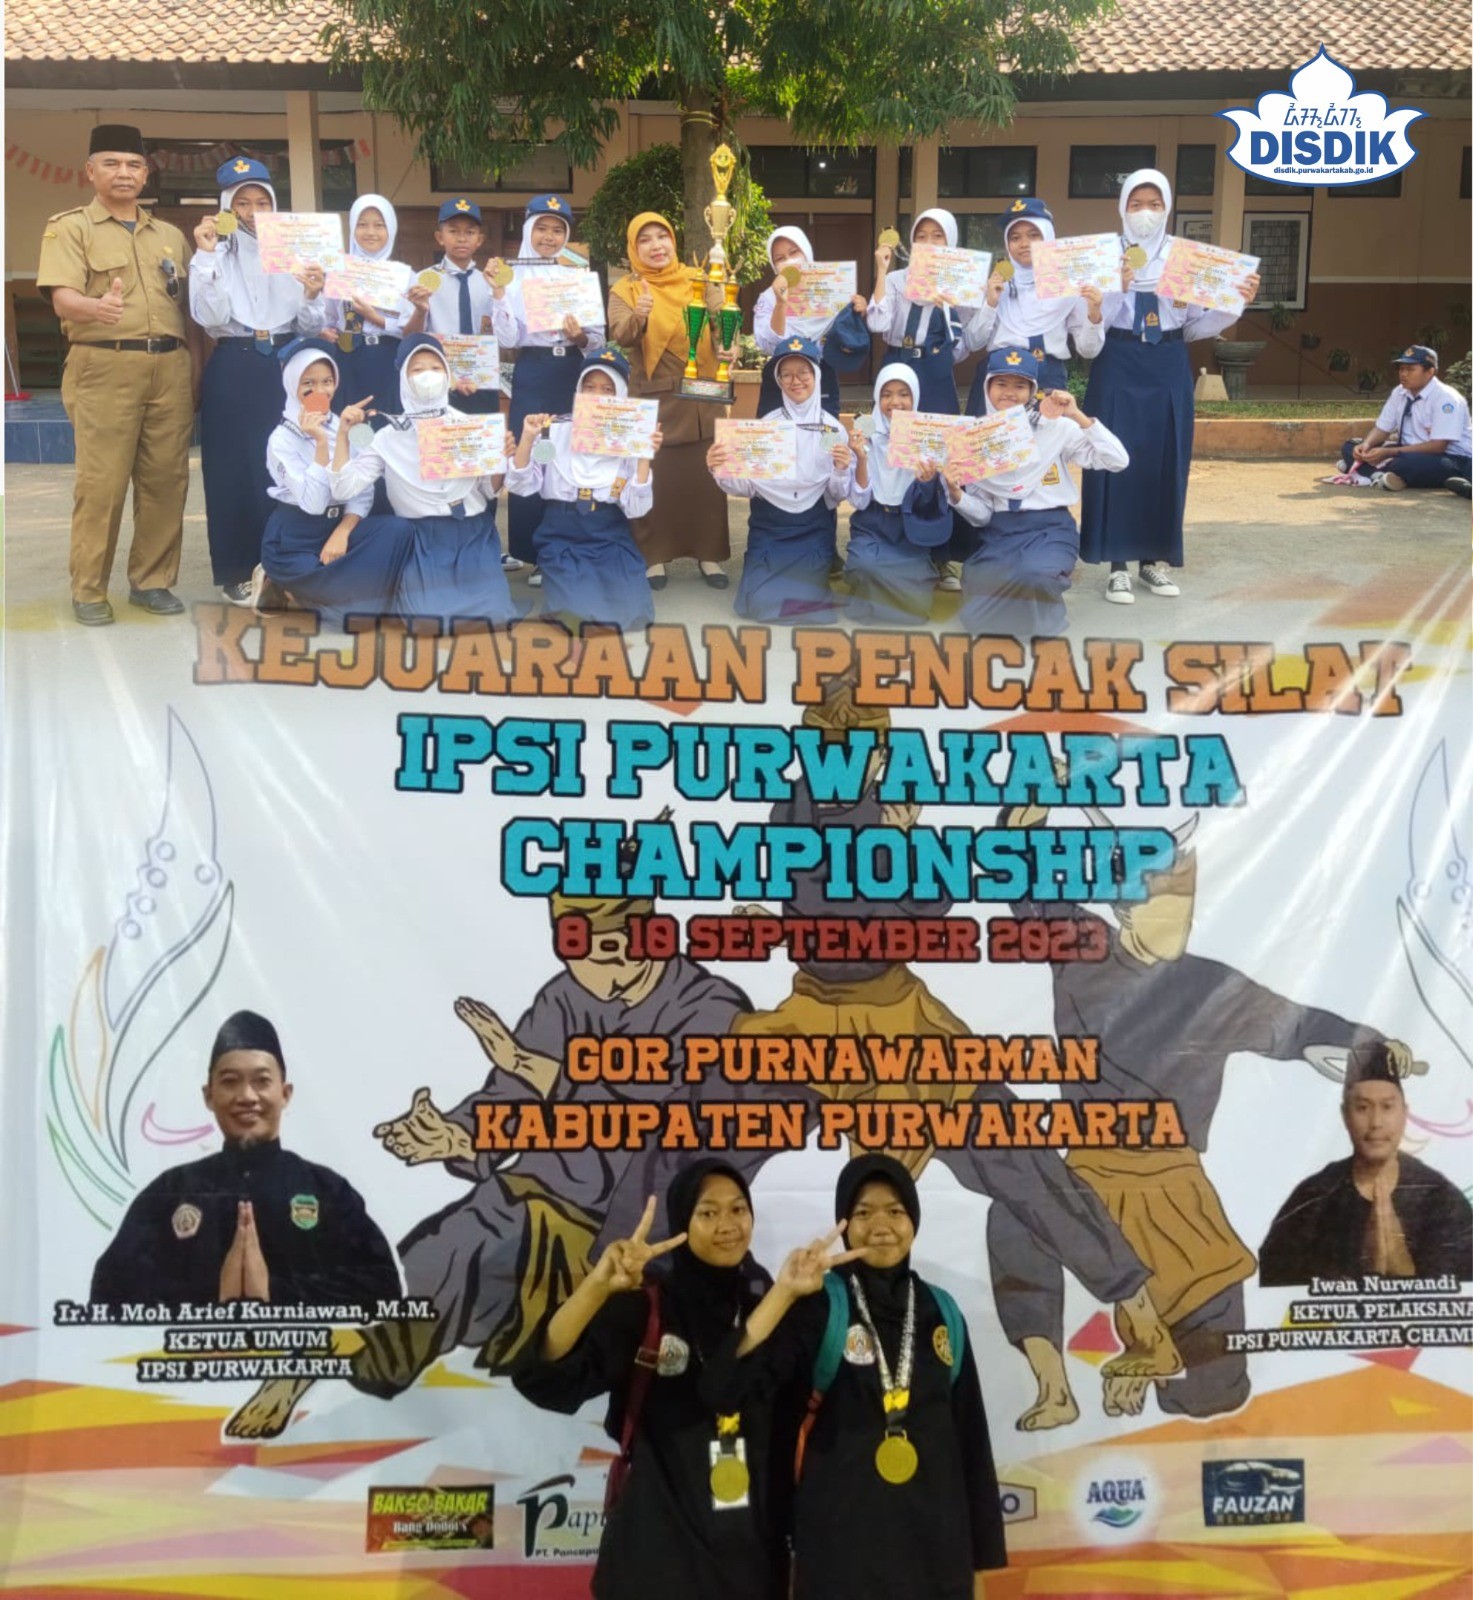 Syahdu SMPN 5 Purwakarta Raih Juara Umum dalam Kejuaraan Pencak Silat IPSI Purwakarta